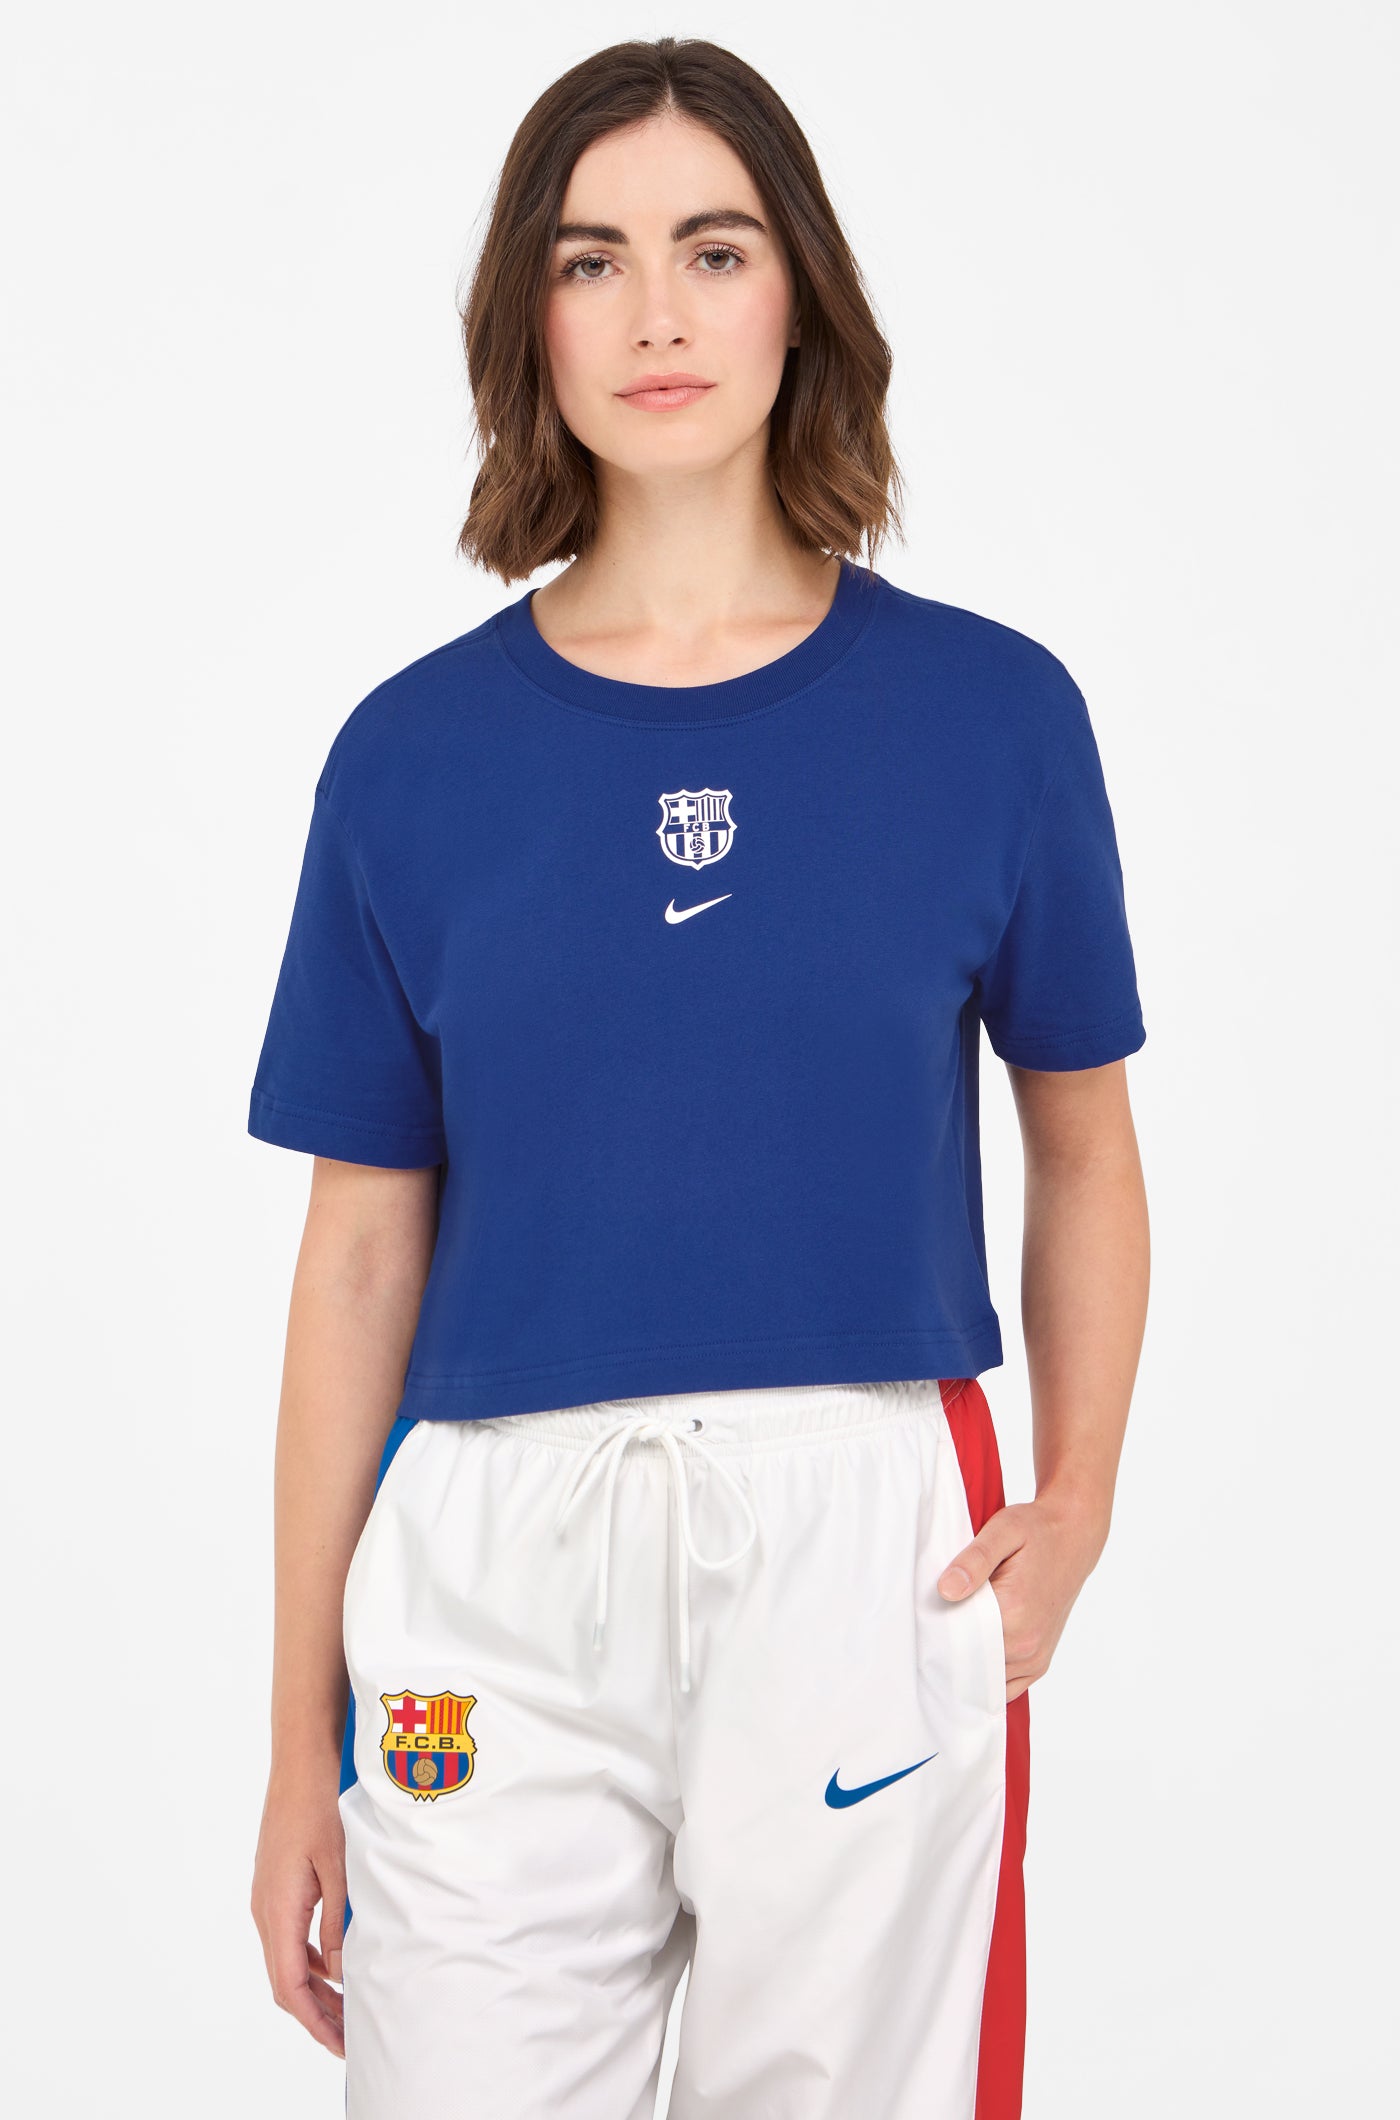 Crop top écusson bleu Barça Nike - Femme